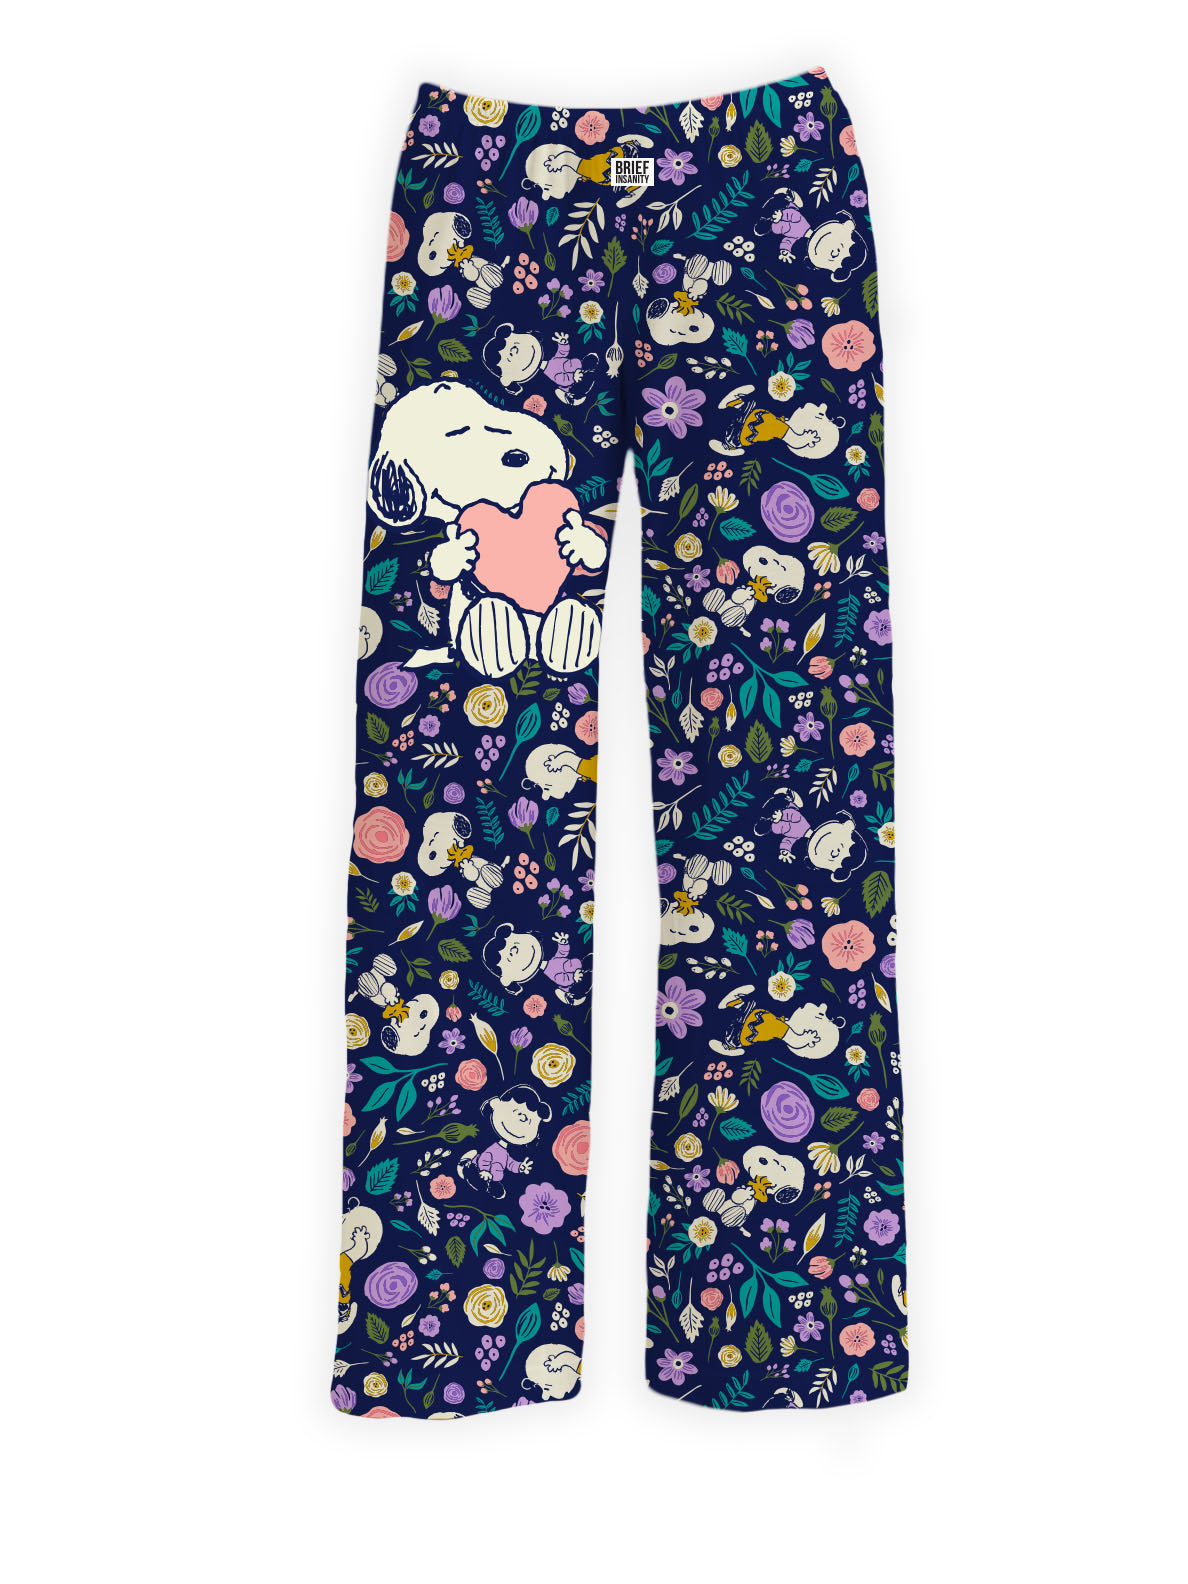 BRIEF INSANITY Snoopy Floral Love Pajama Lounge Pants